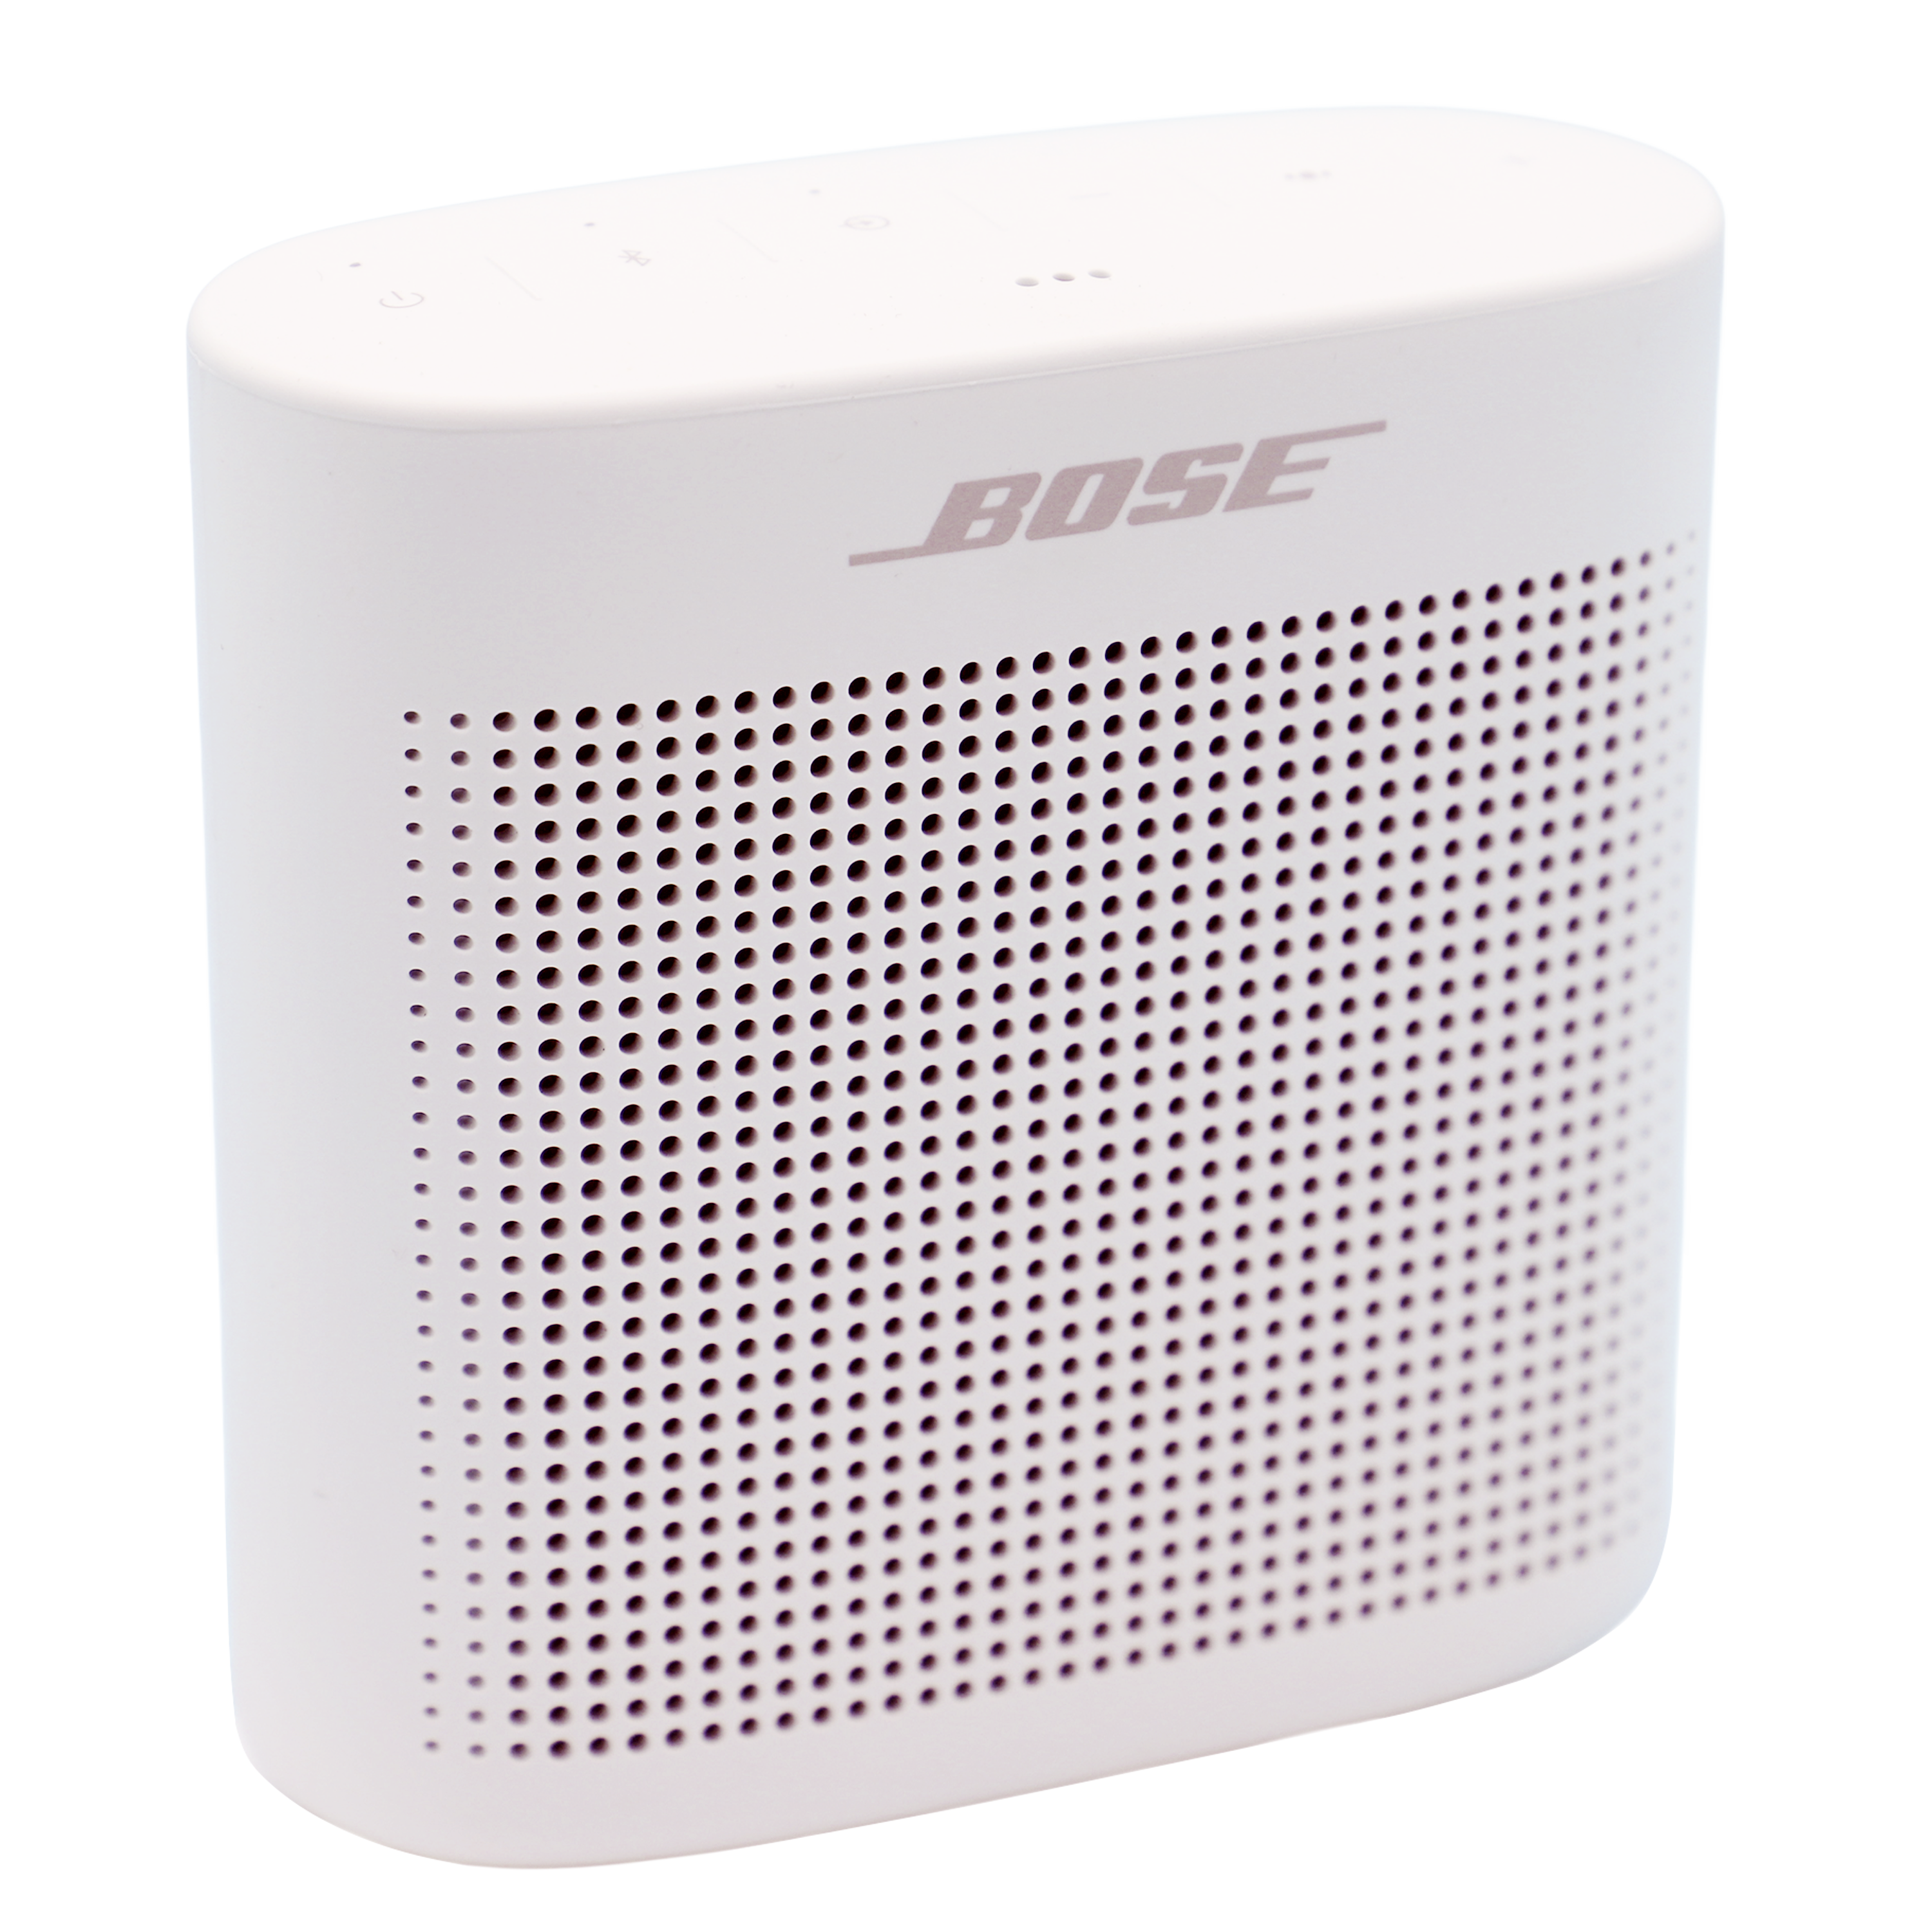 Rent Bose Soundlink Color Bluetooth Speaker (US) from $4.90 per month